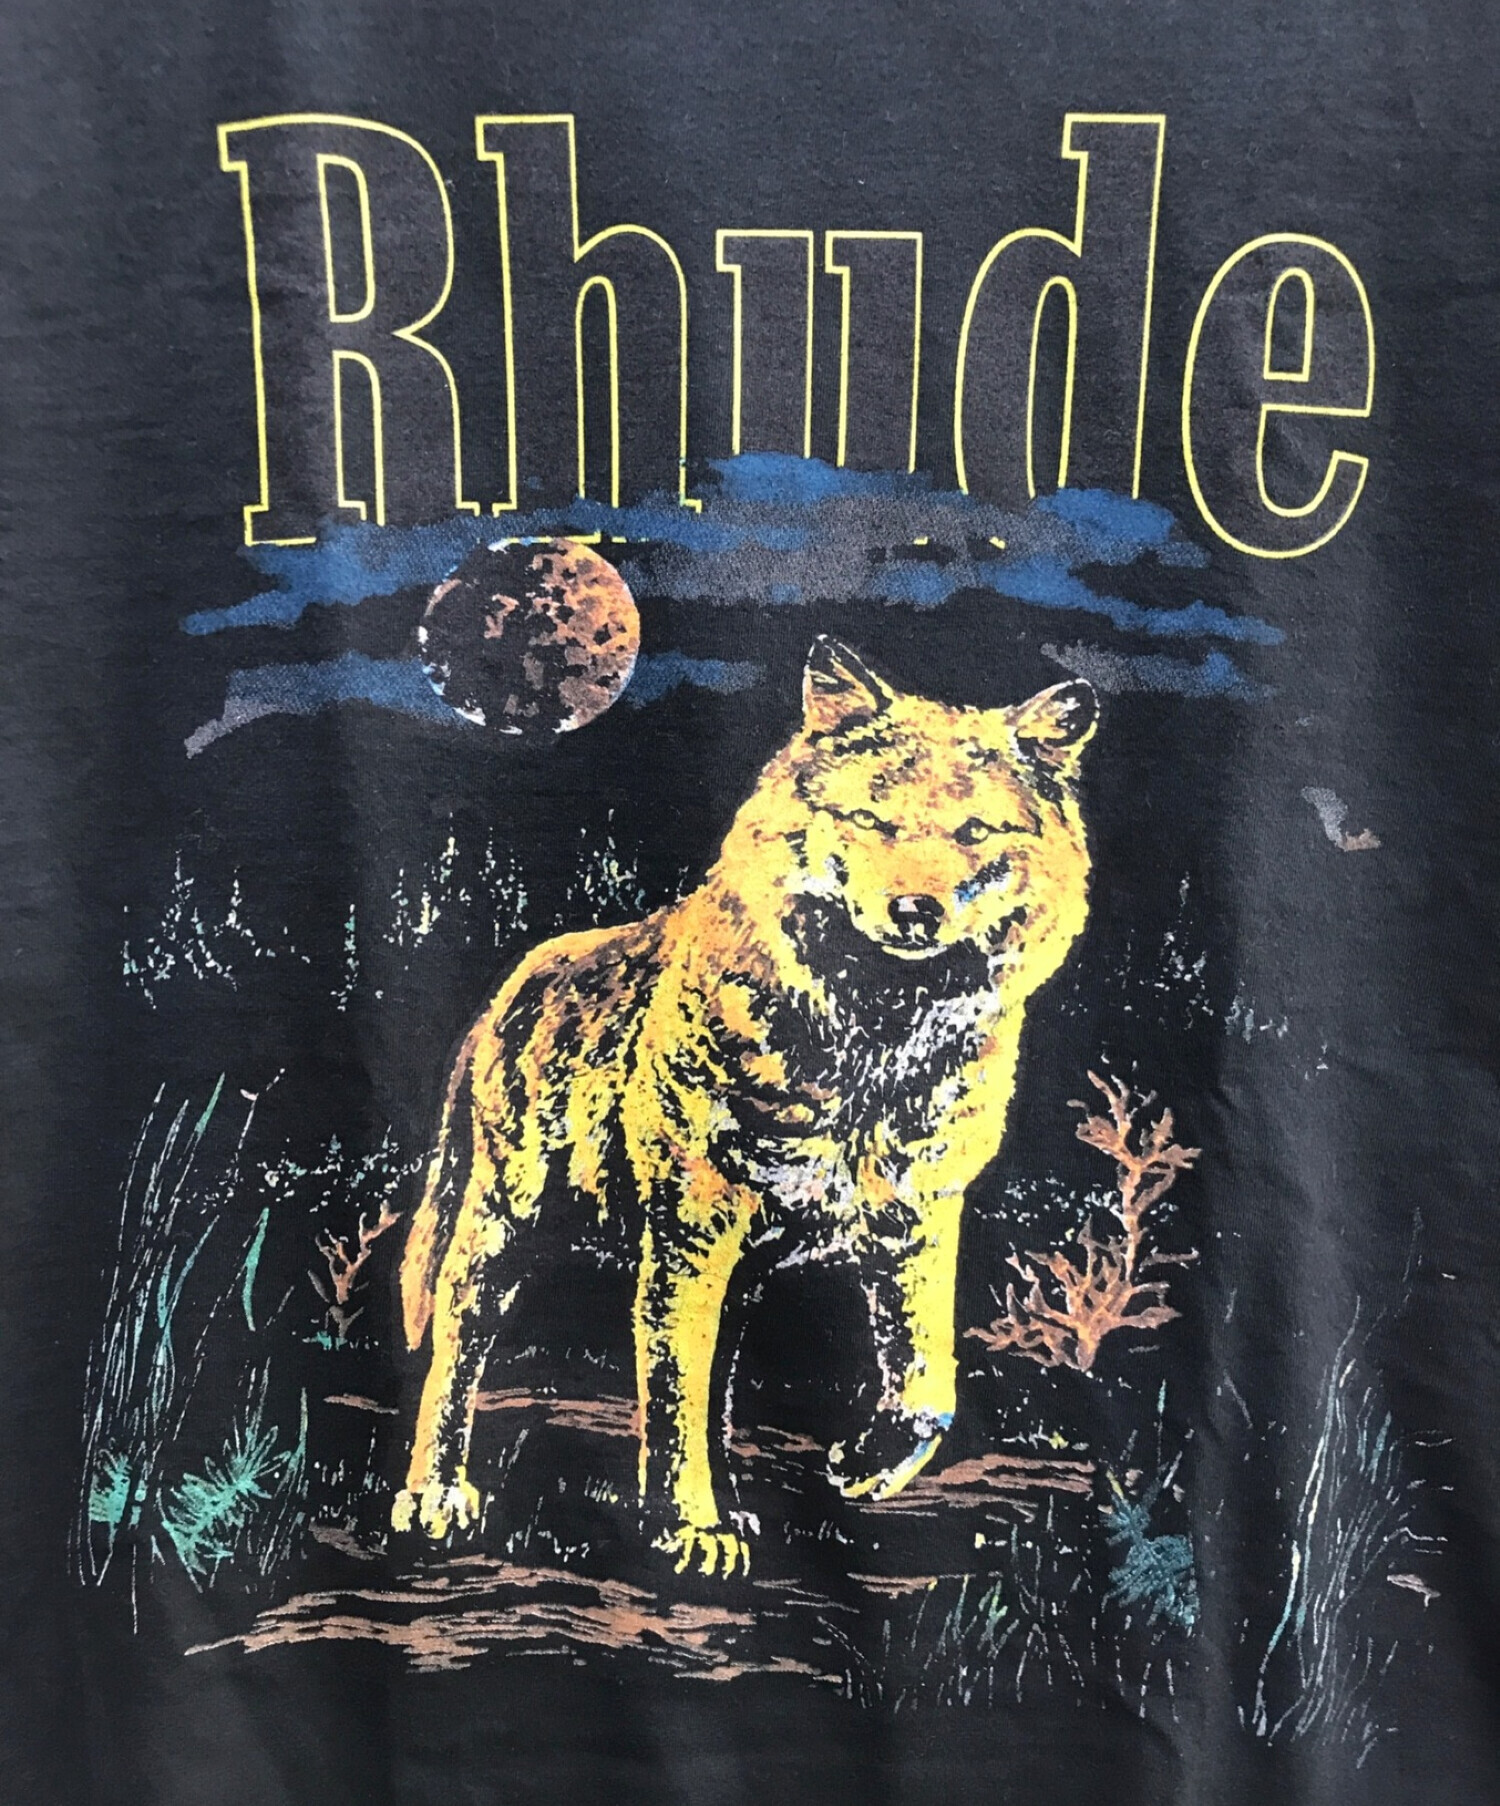 RHUDE Tシャツ coyote  20SS